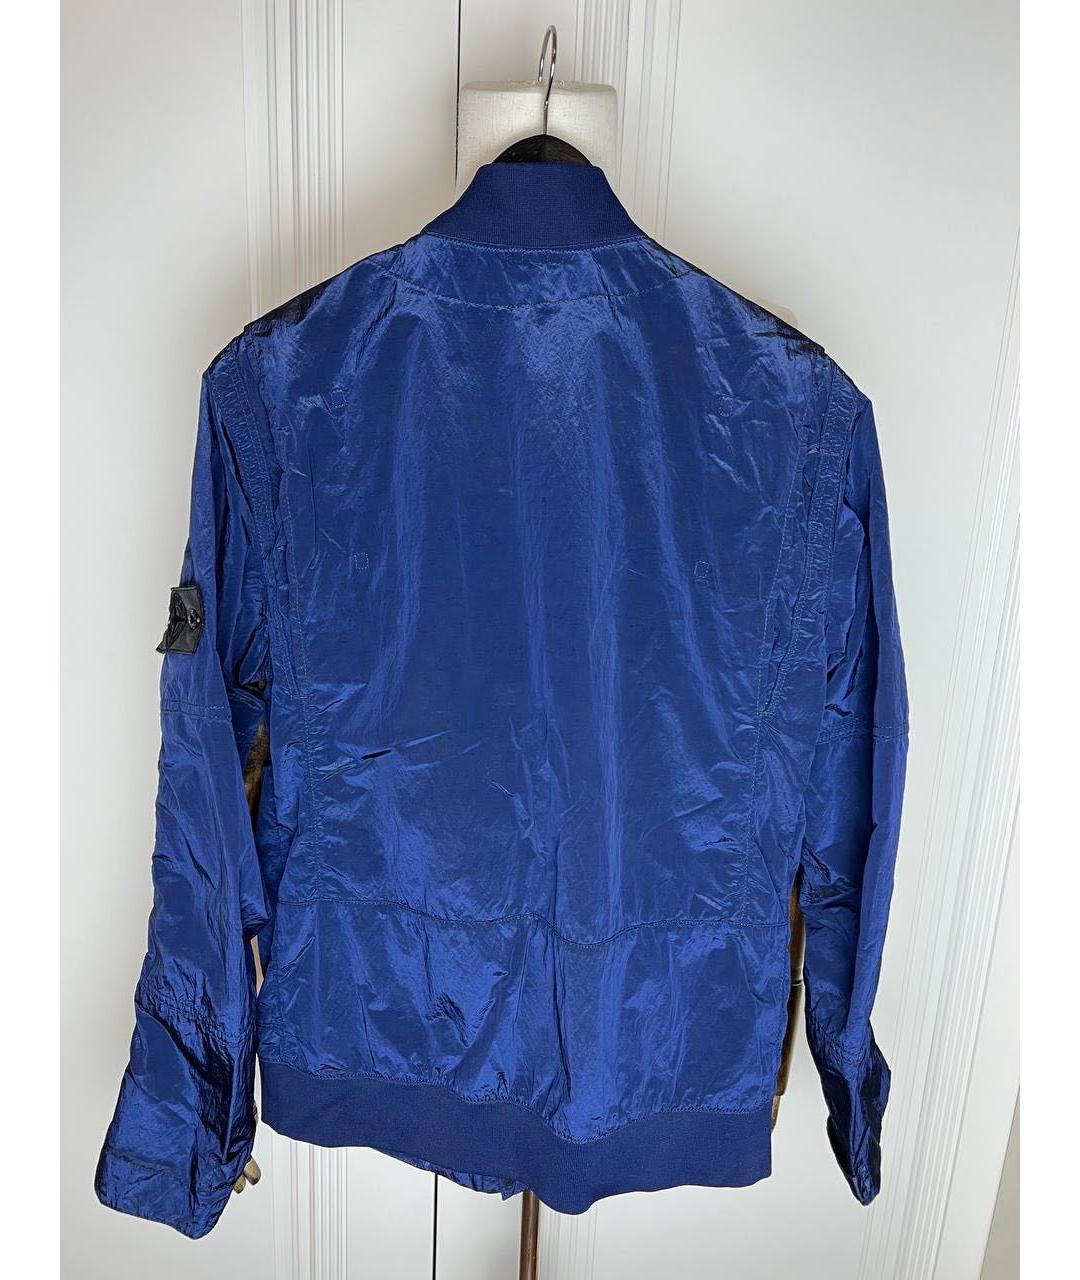 STONE ISLAND SHADOW PROJECT Синяя куртка, фото 2